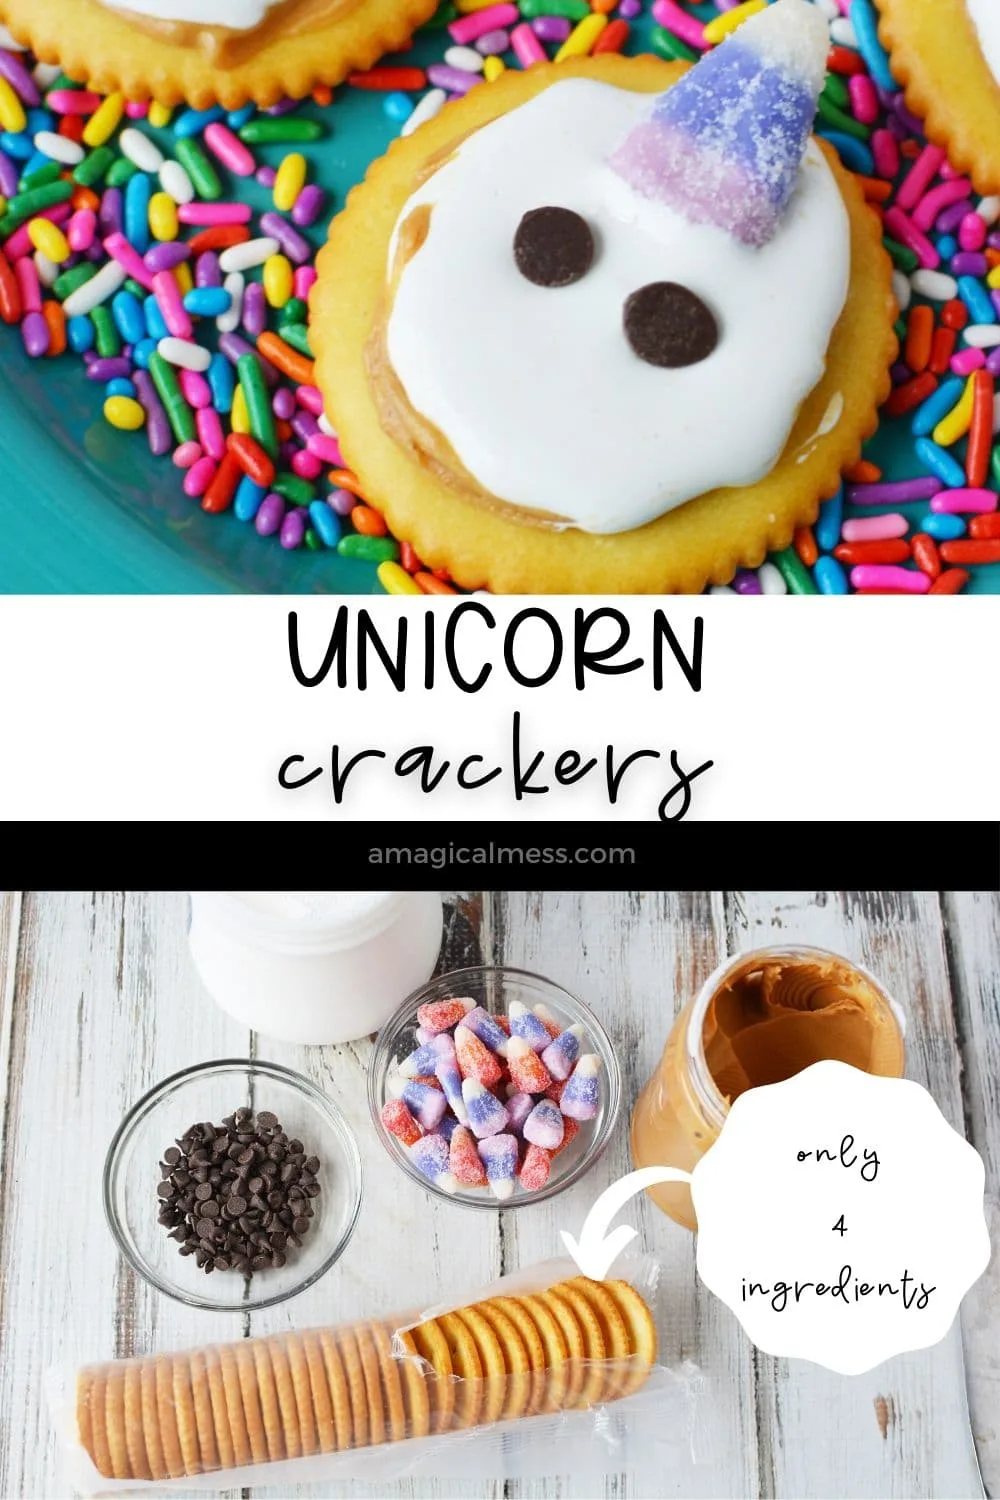 ingredients for unicorn crackers